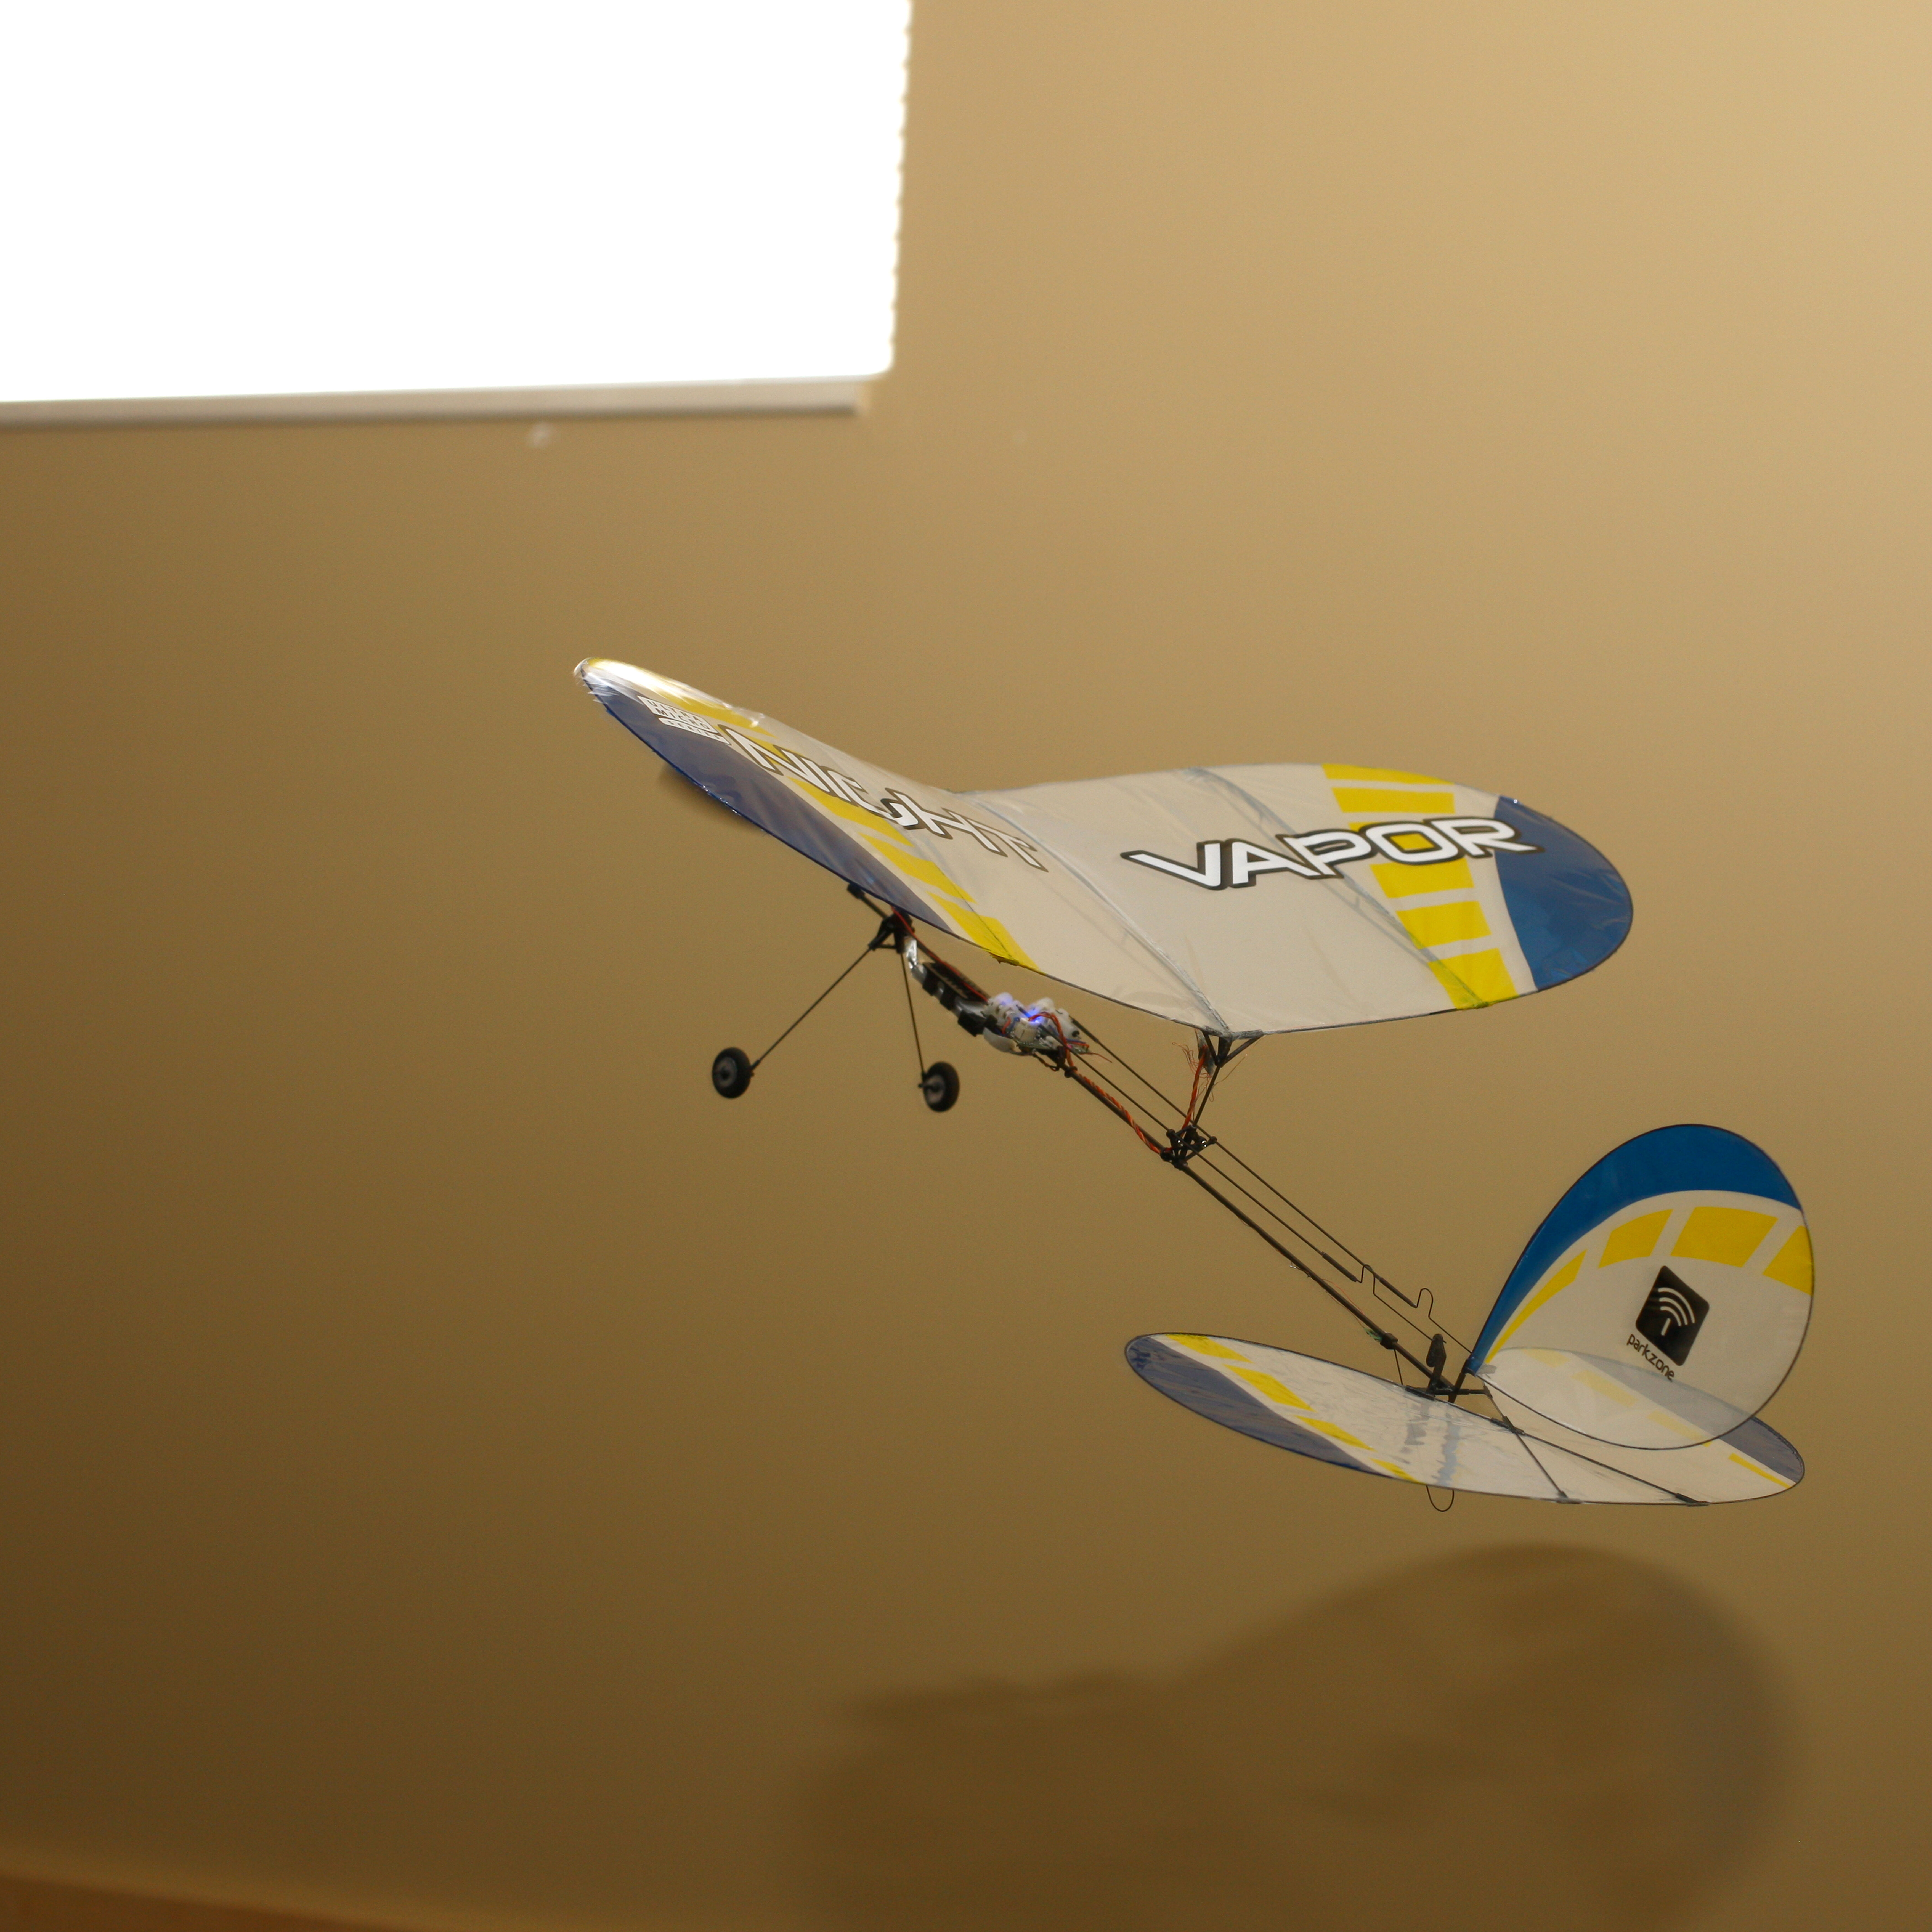 vapor rc airplane